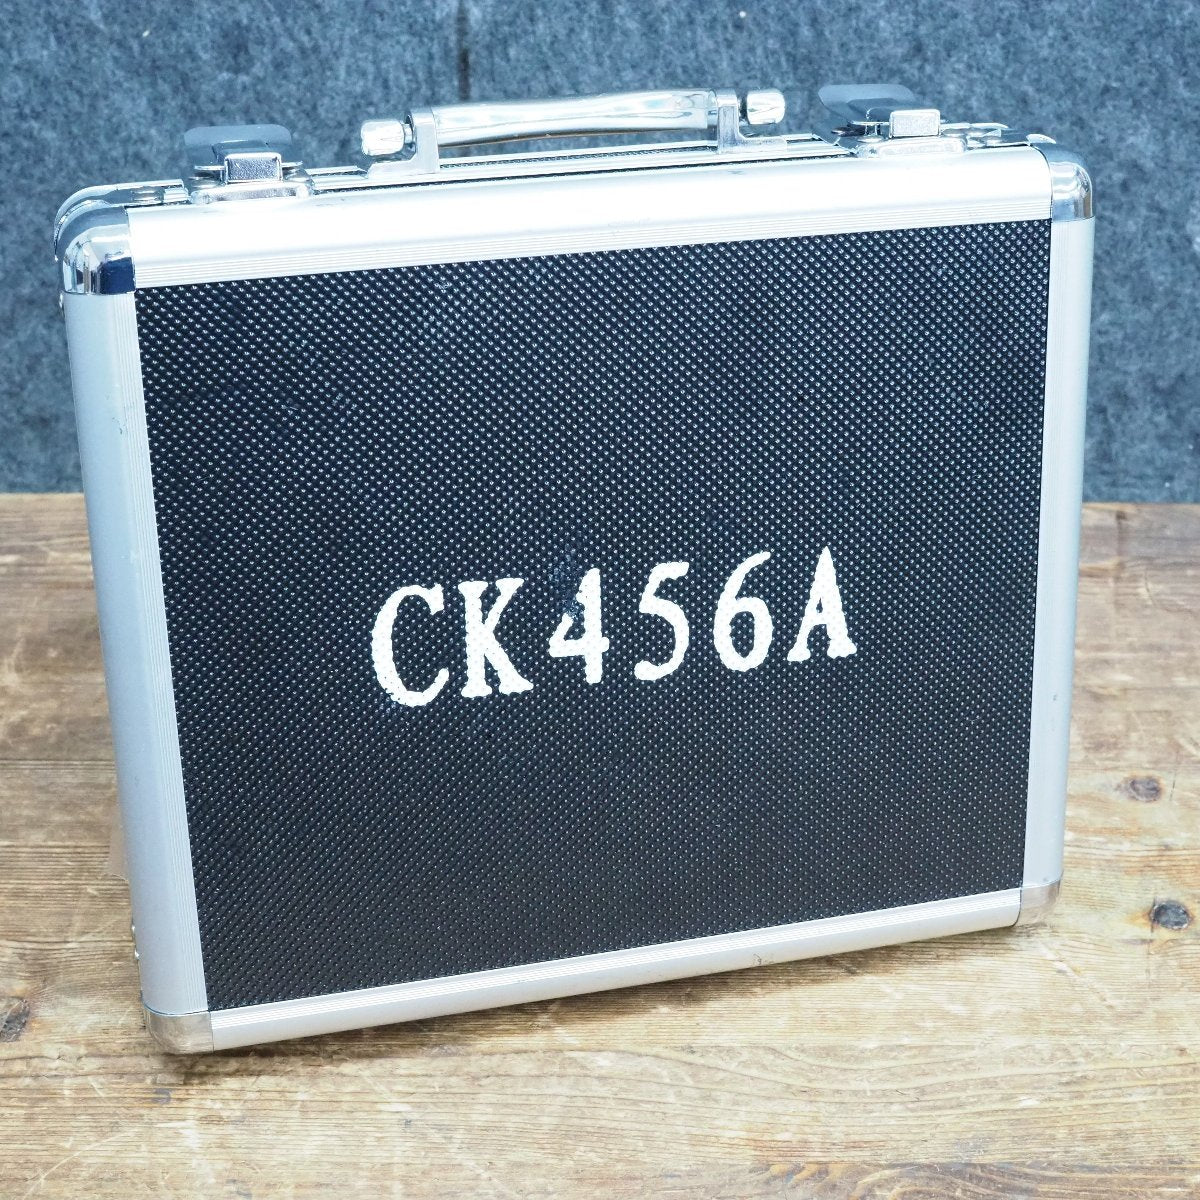 KANA CK456A チェーンカッターセット - 電動工具本体